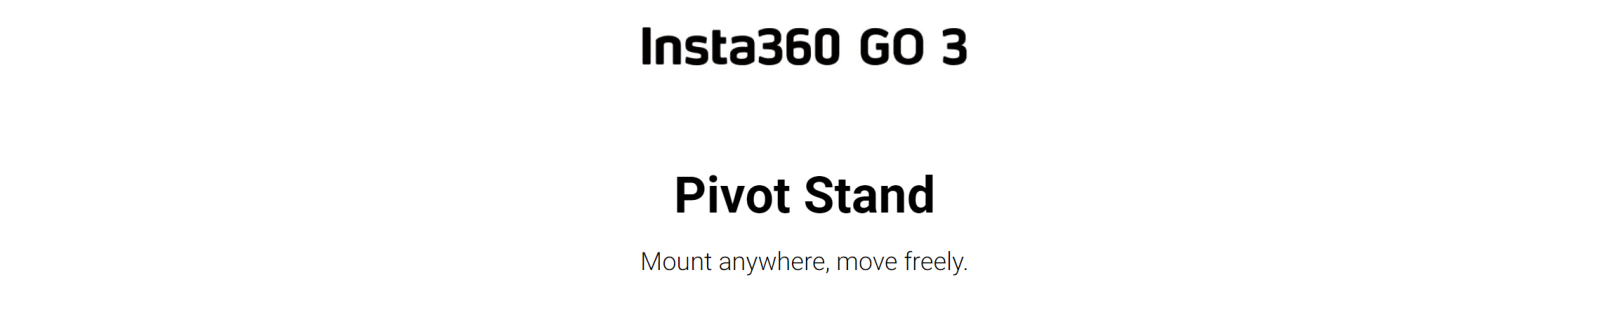 Insta360 GO3 Pivot Stand 10 - mount anywhere